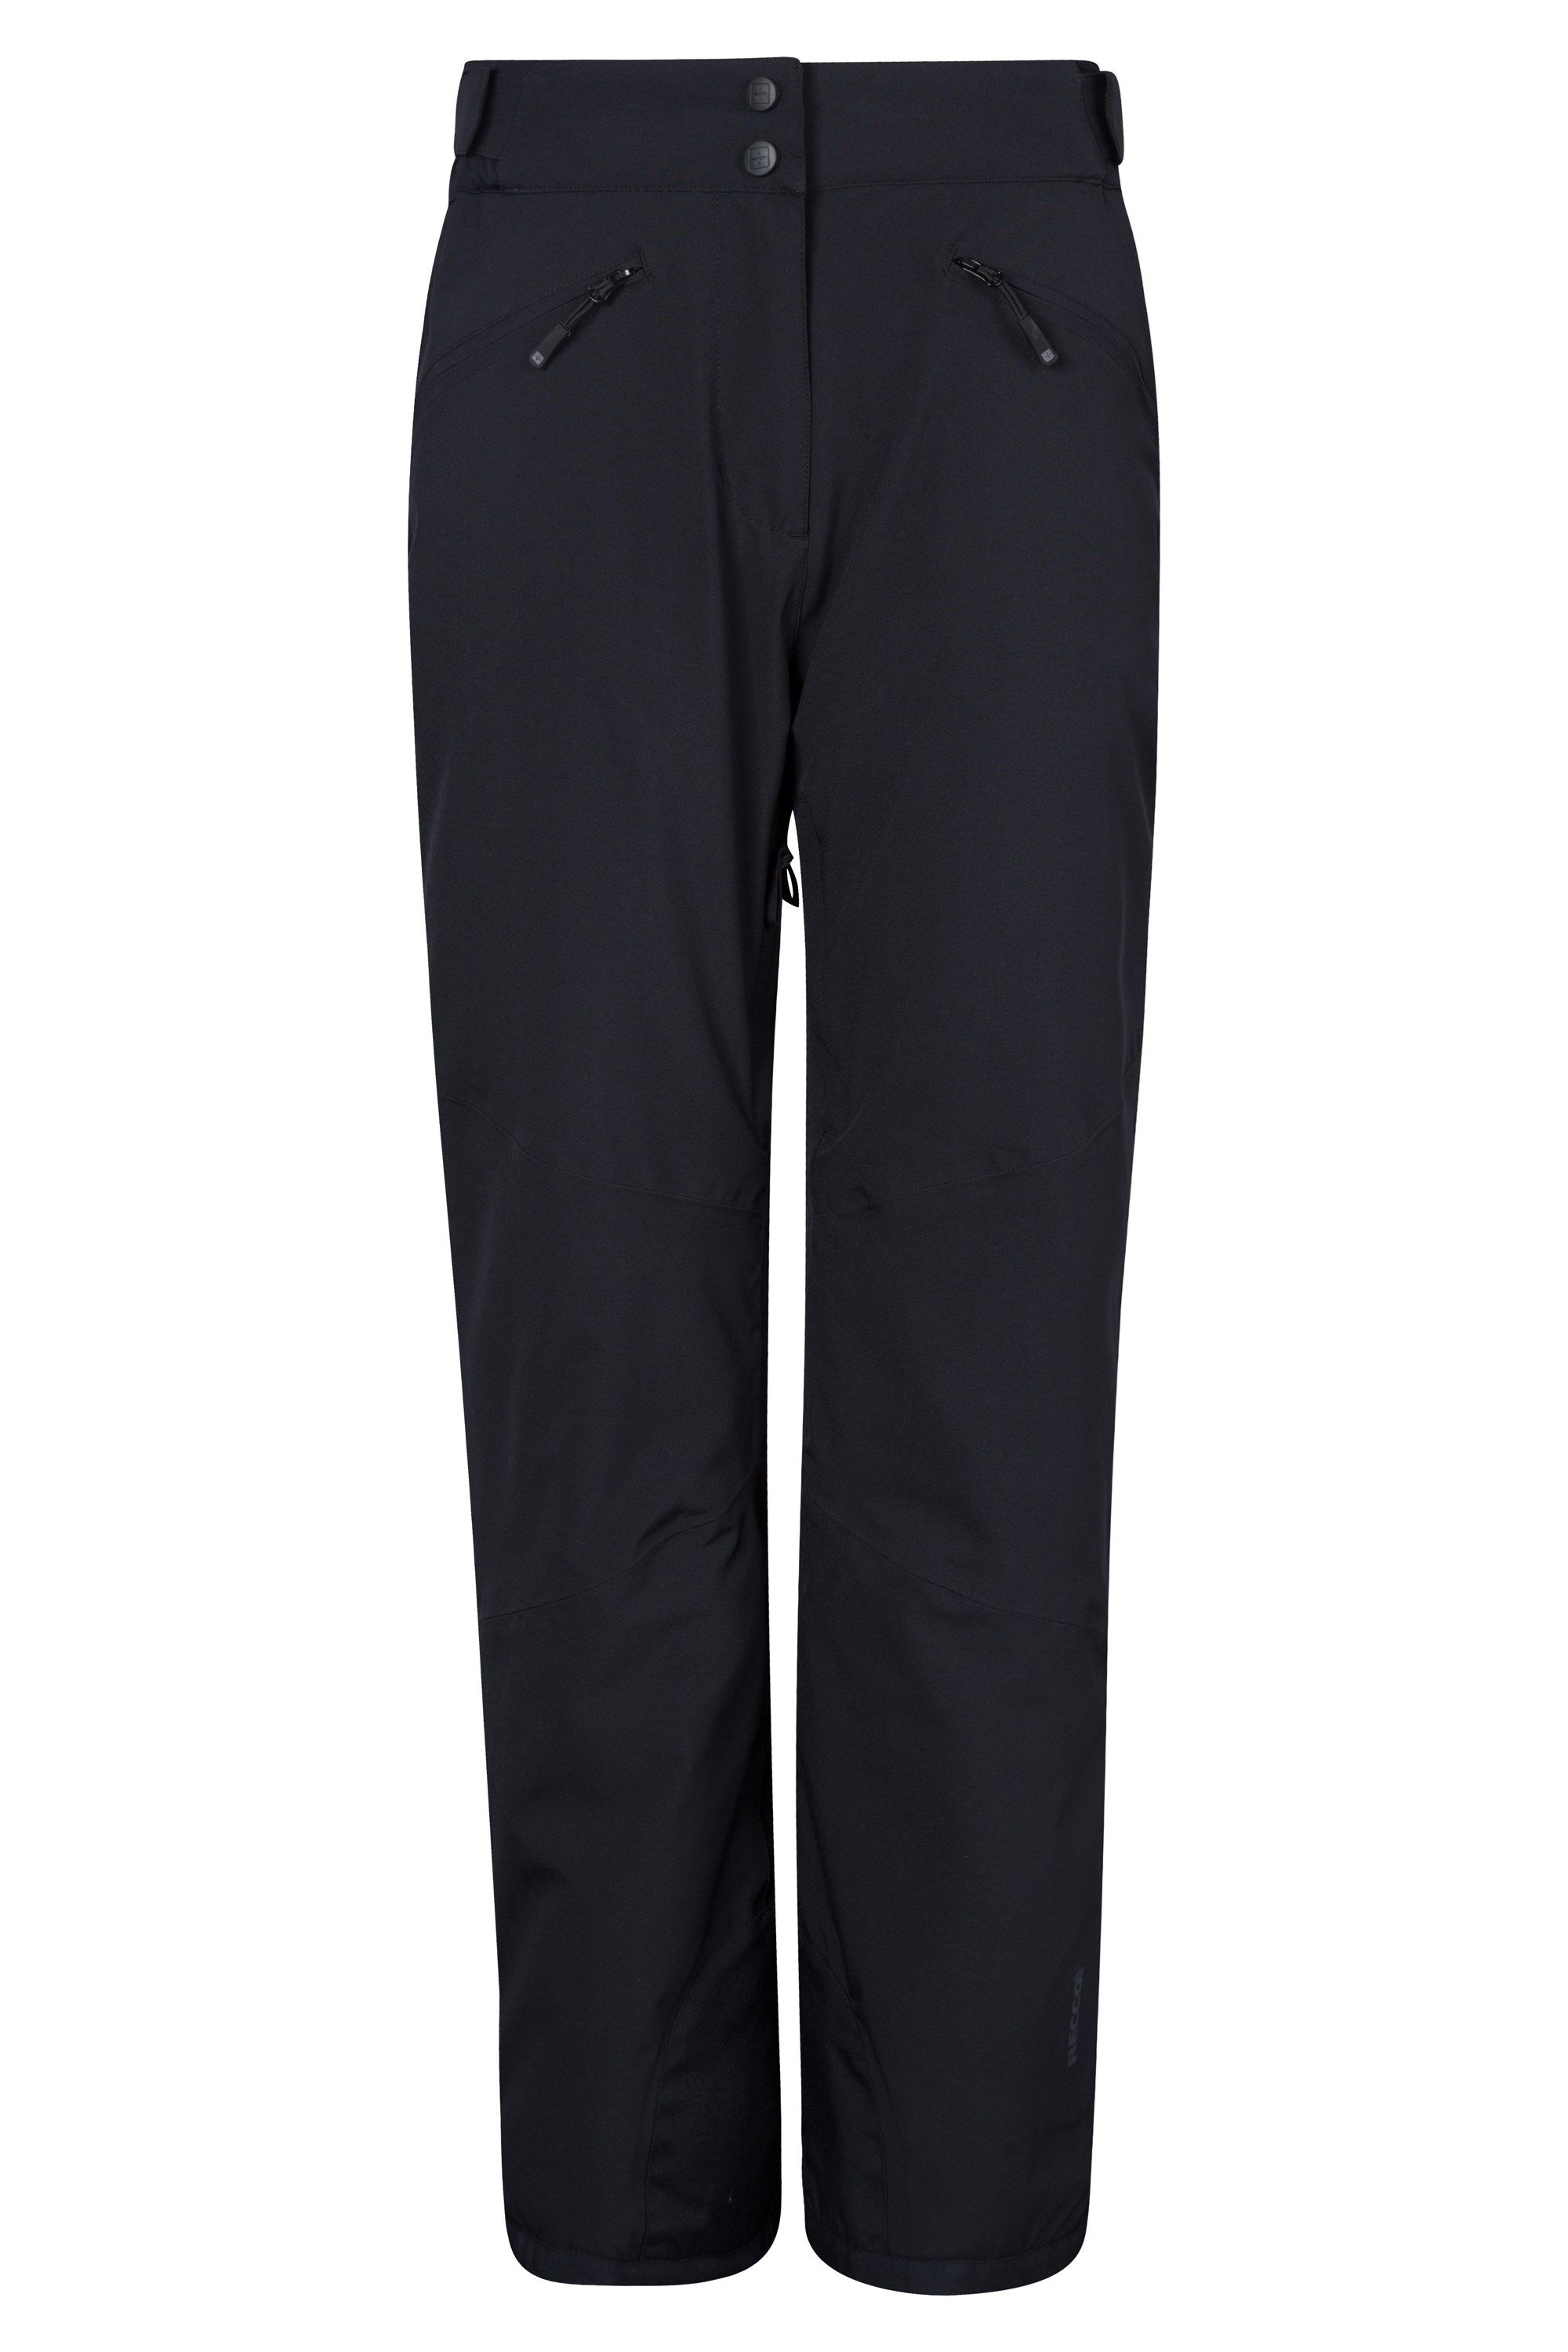 Isola Womens Extreme Ski Pants - Short Length - Black | Mountain Warehouse